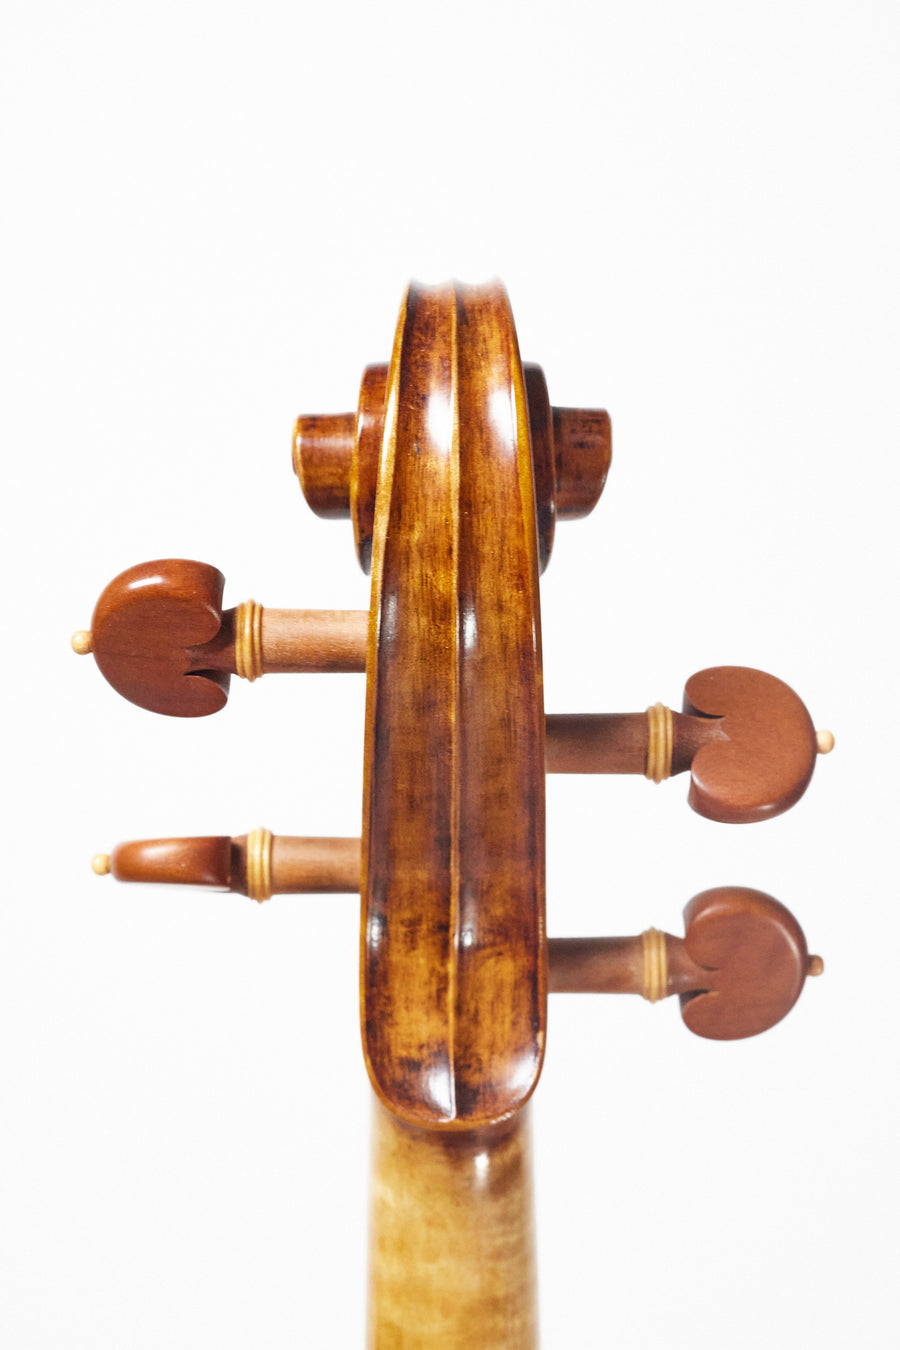 A Modern German Violin Attributed to Otto Burlich, 1985.